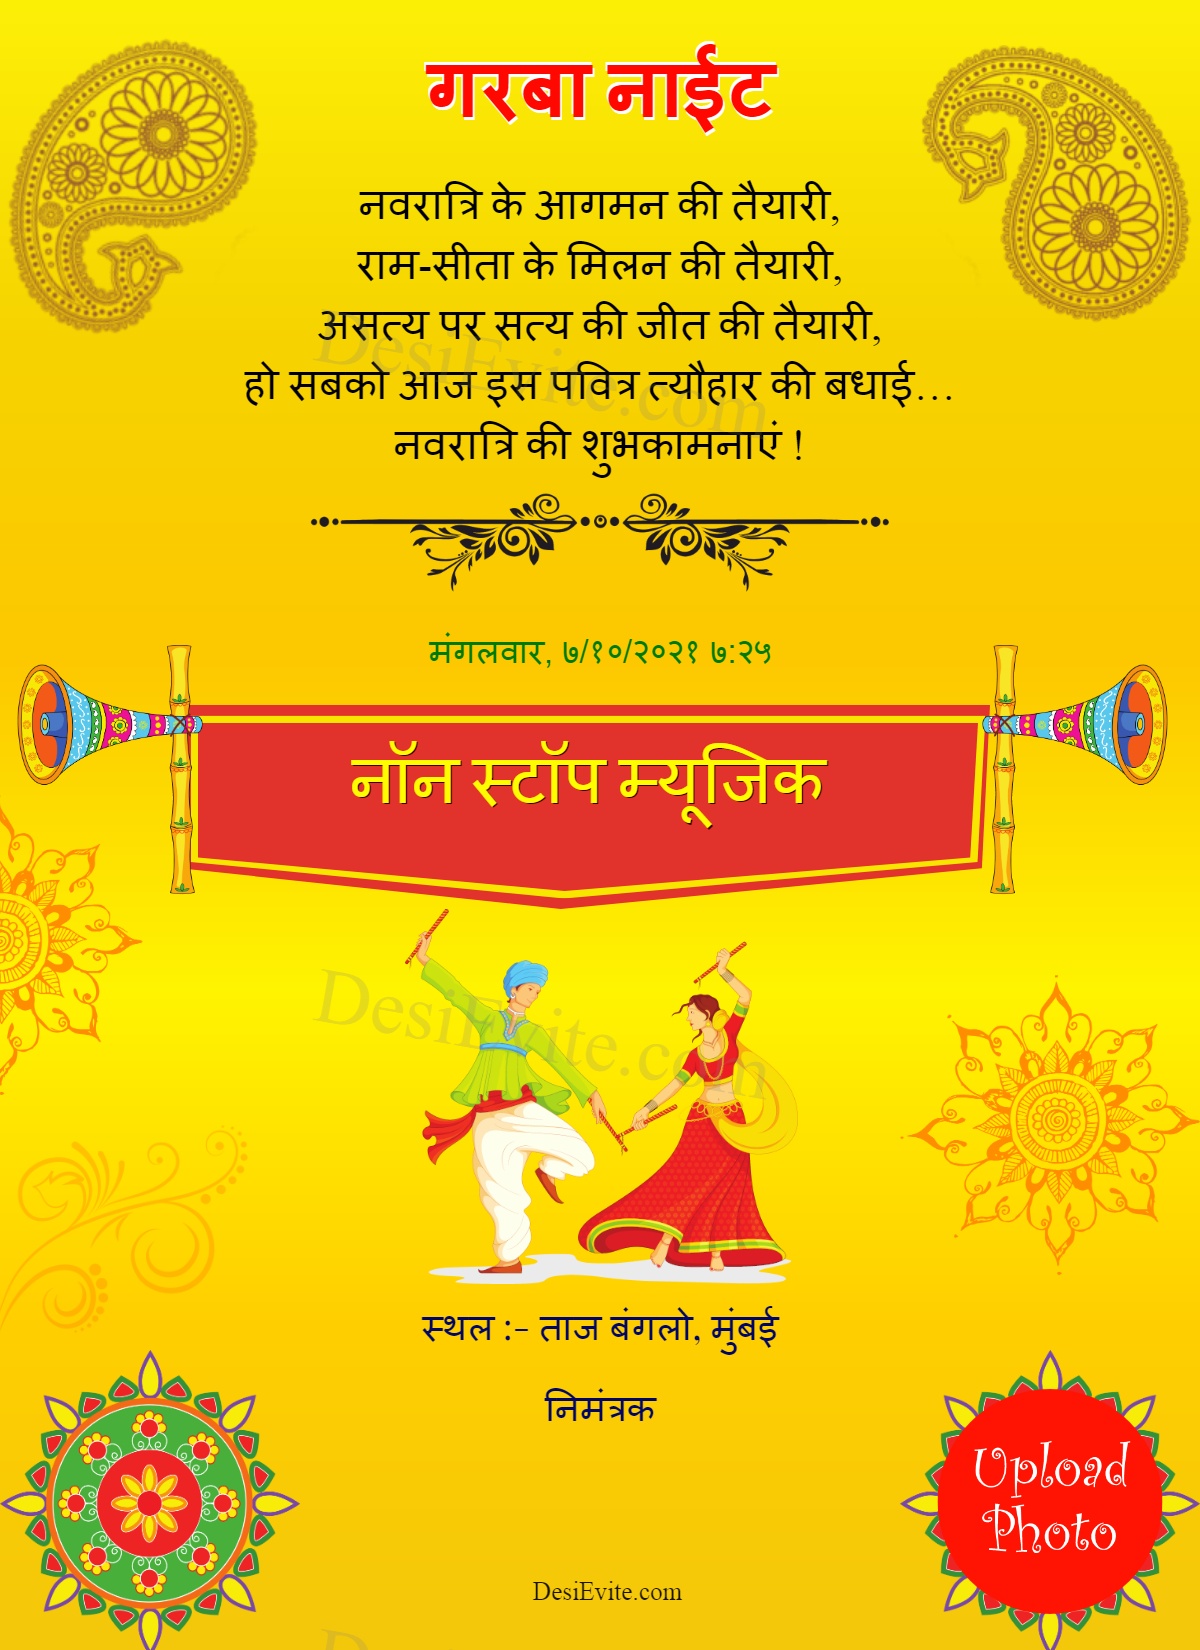 Hindi garba night traditional invitation card with photo template 103